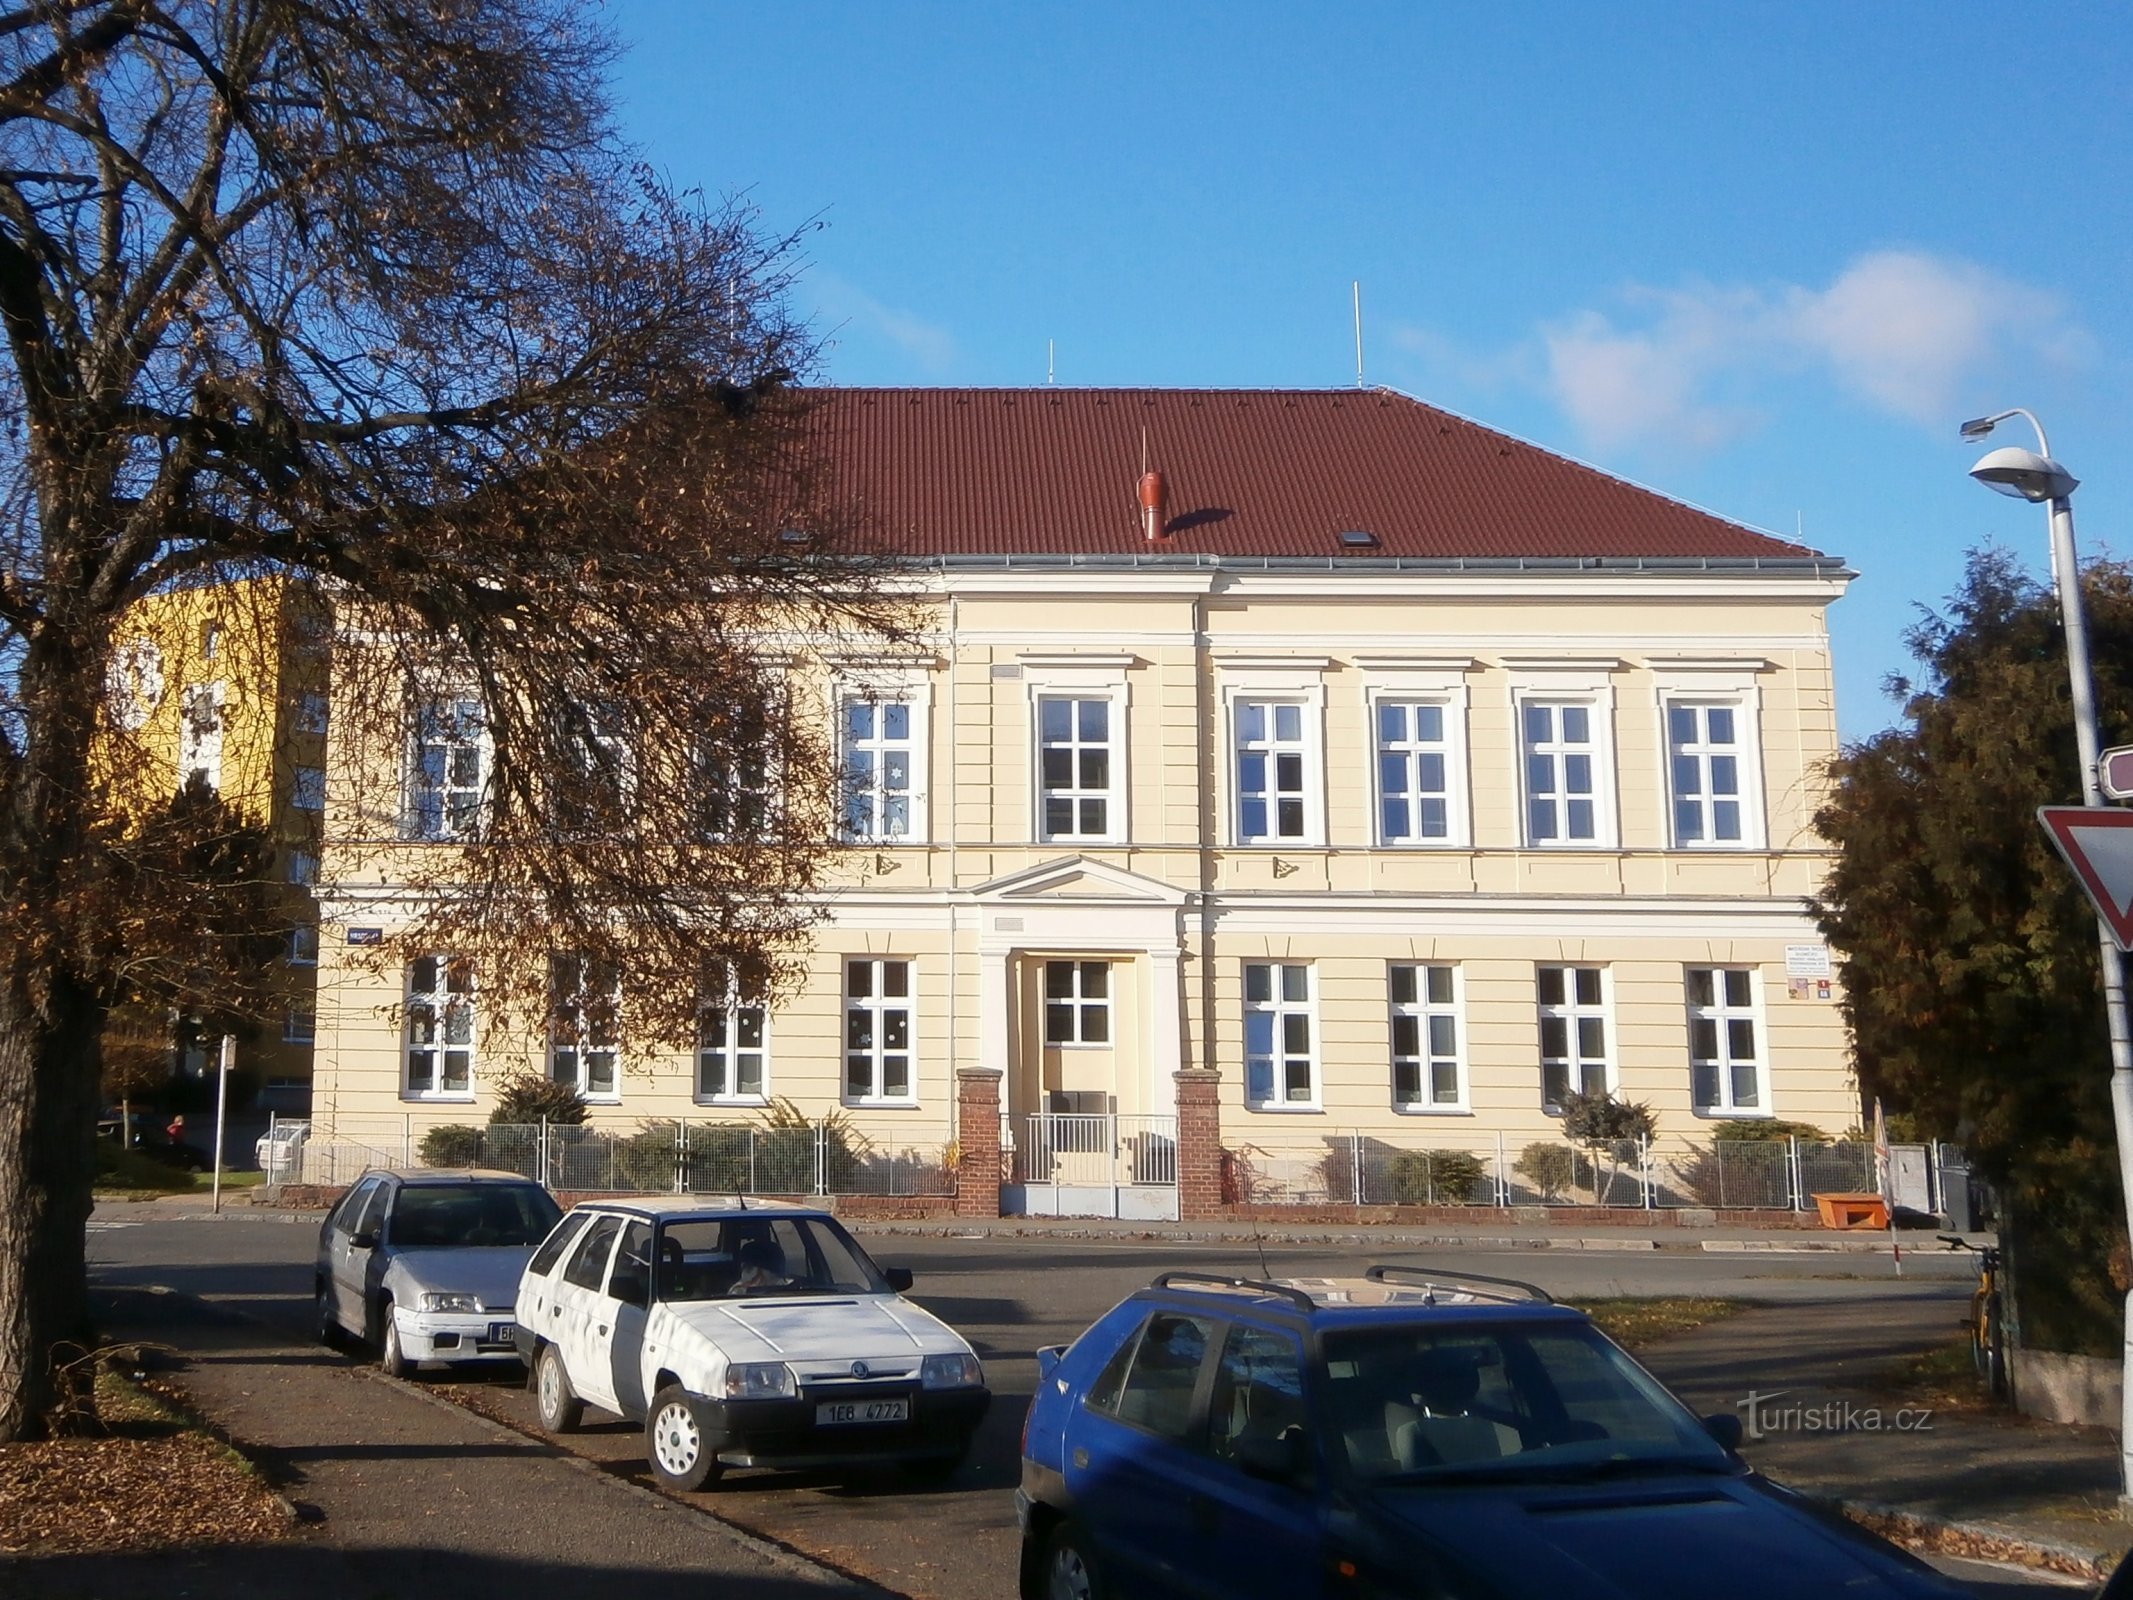 Scuola materna (Třebeš)